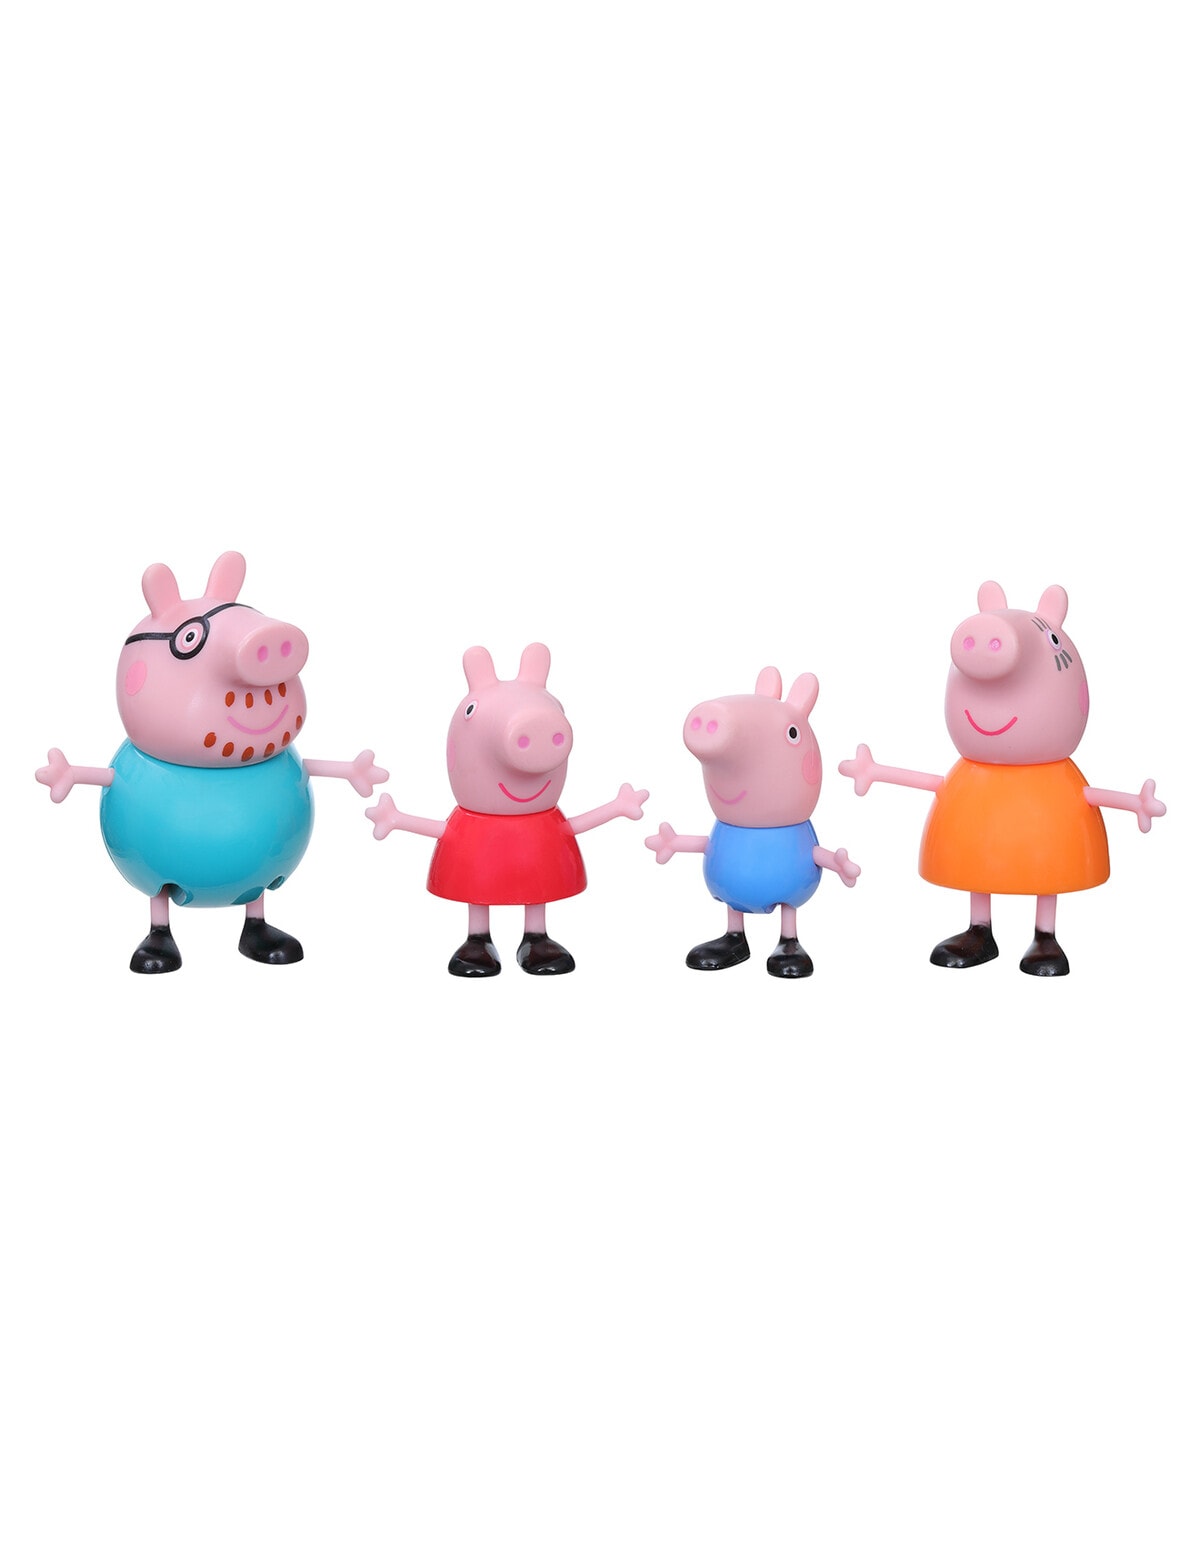 Fisher-Price Peppa Pig Peppa & Family 